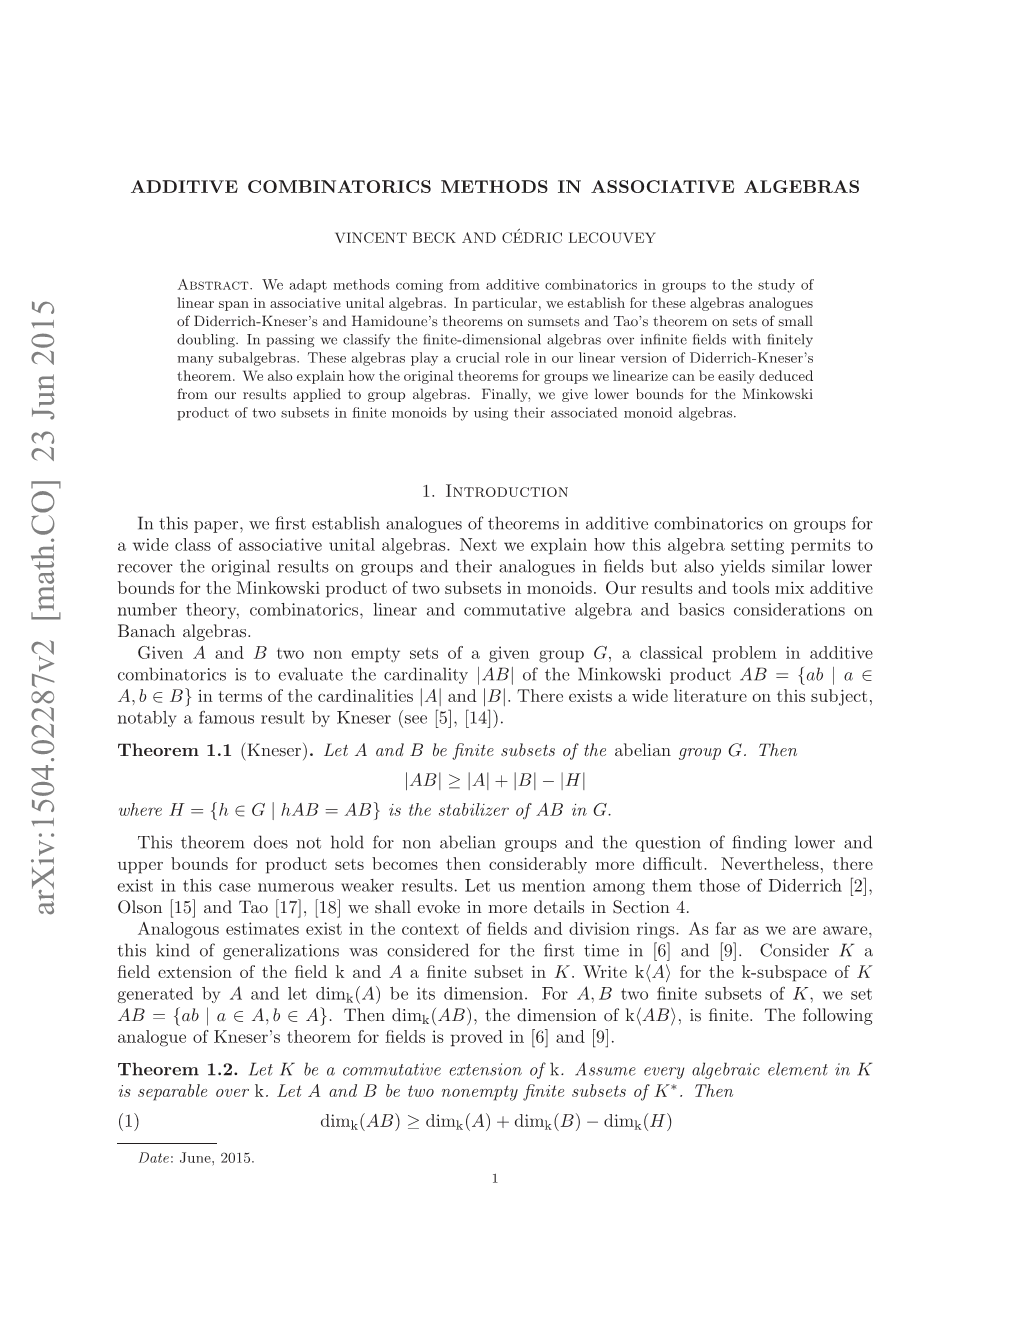 Additive Combinatorics Methods in Associative Algebras